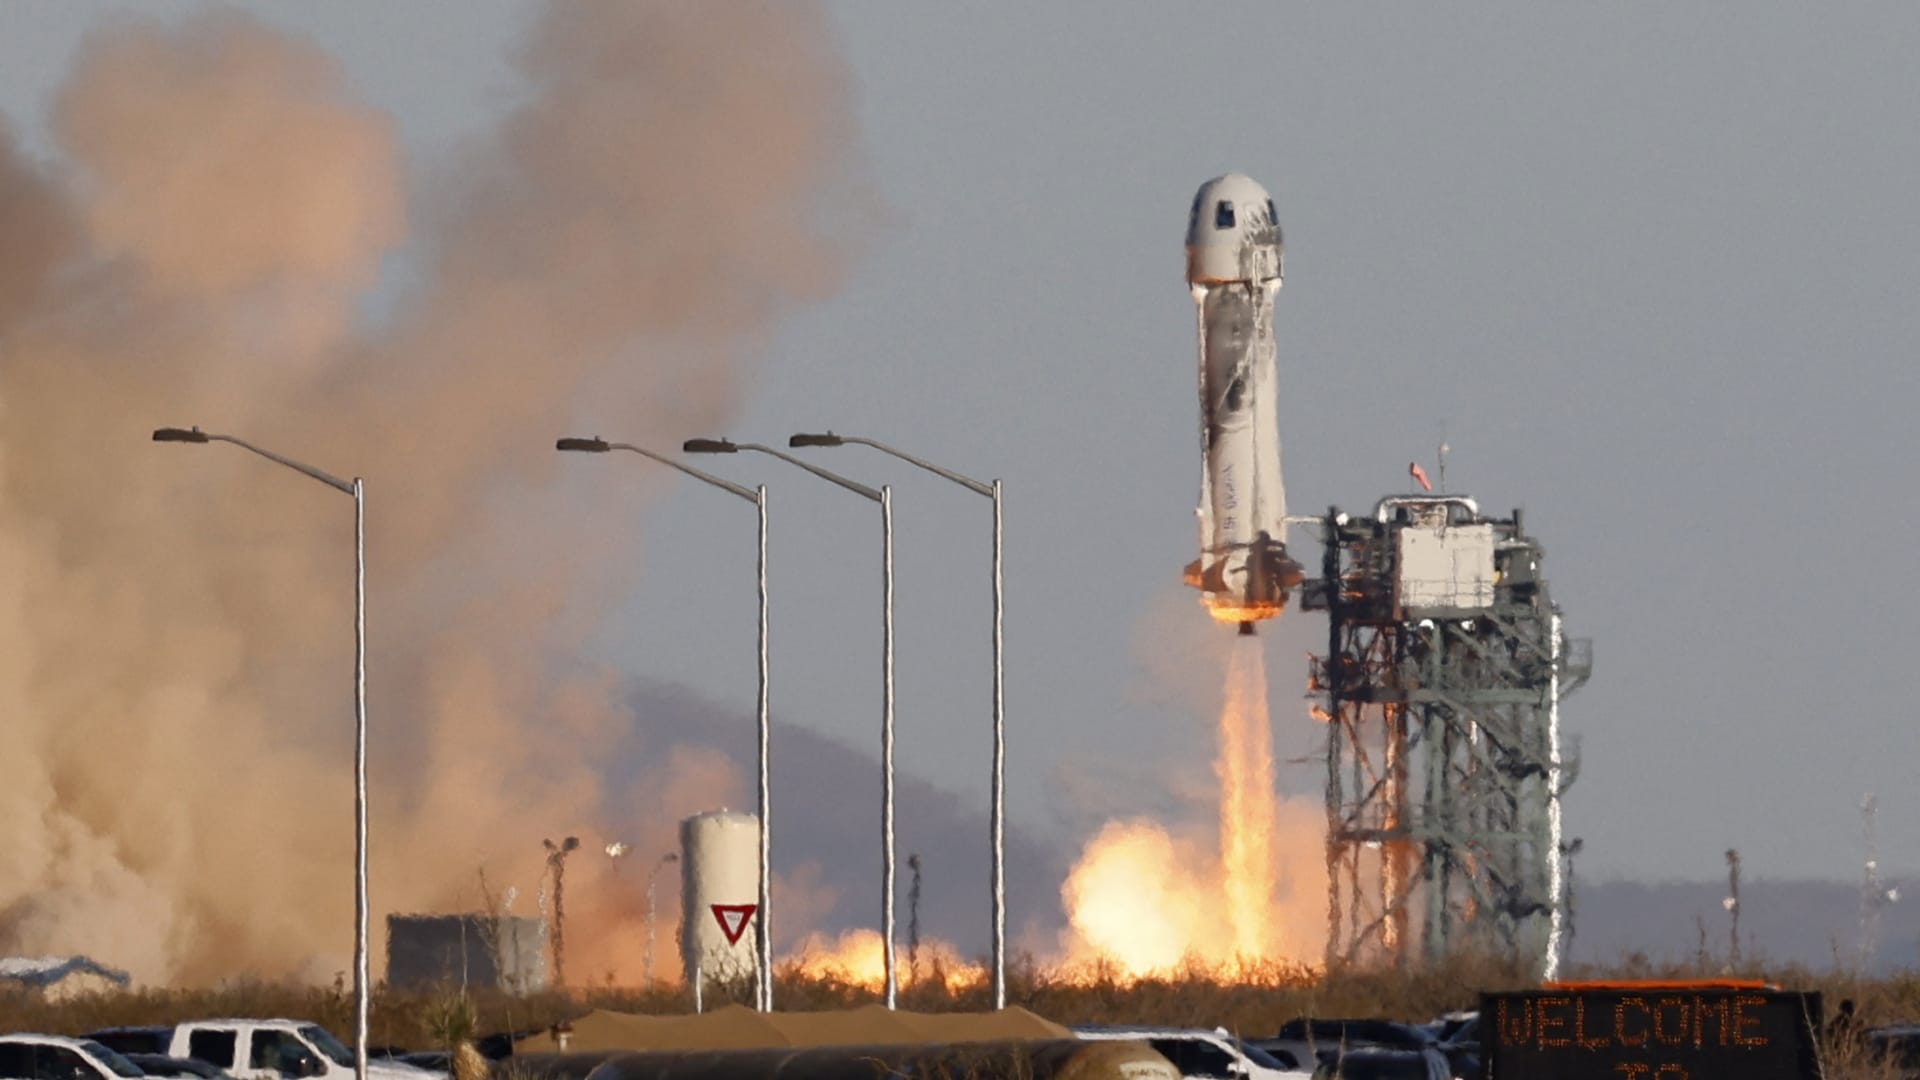 Blue Origin aims to launch New Shepard rocket Dec. 18